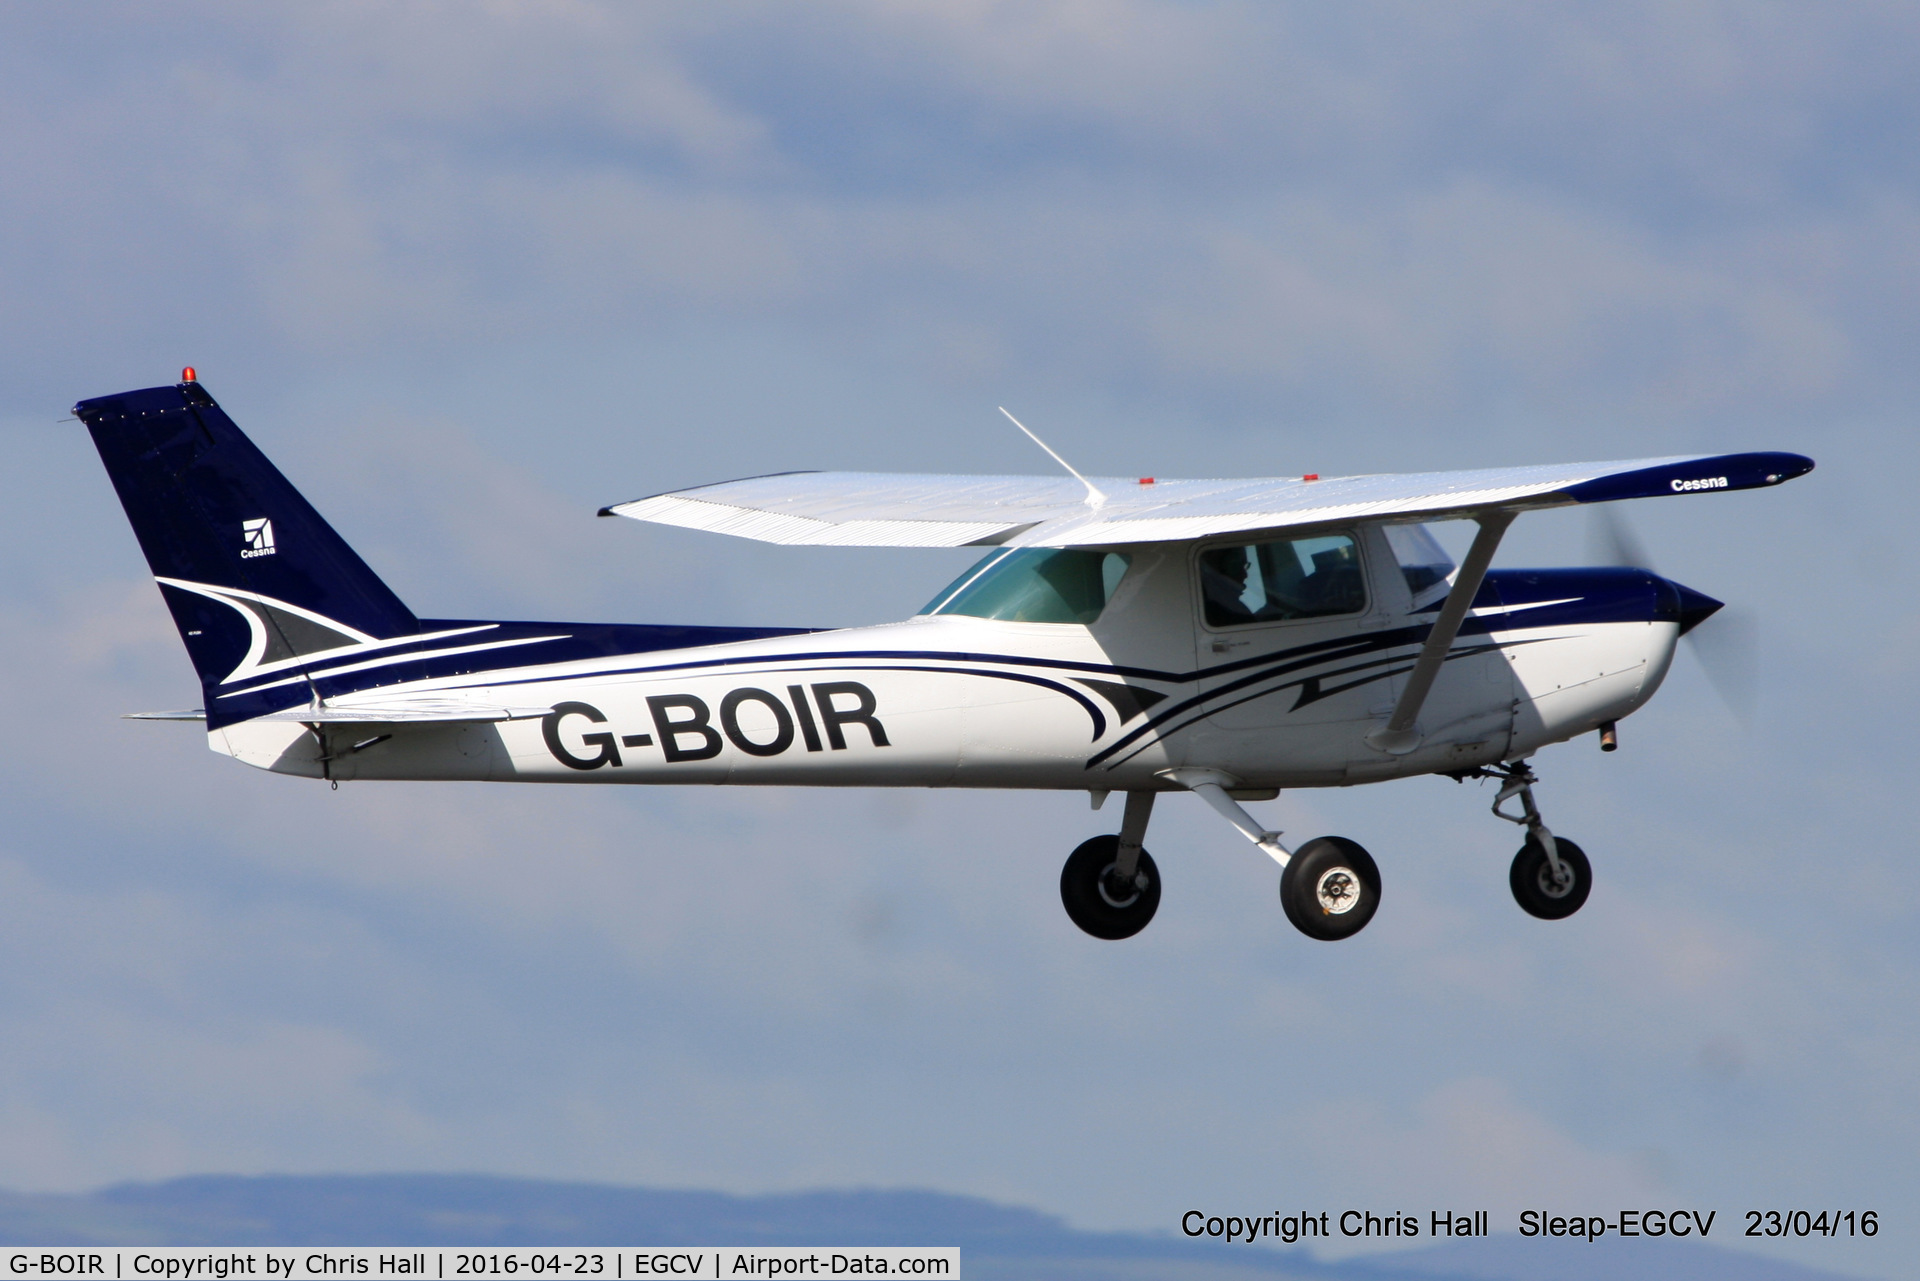 G-BOIR, 1979 Cessna 152 C/N 152-83272, at Sleap